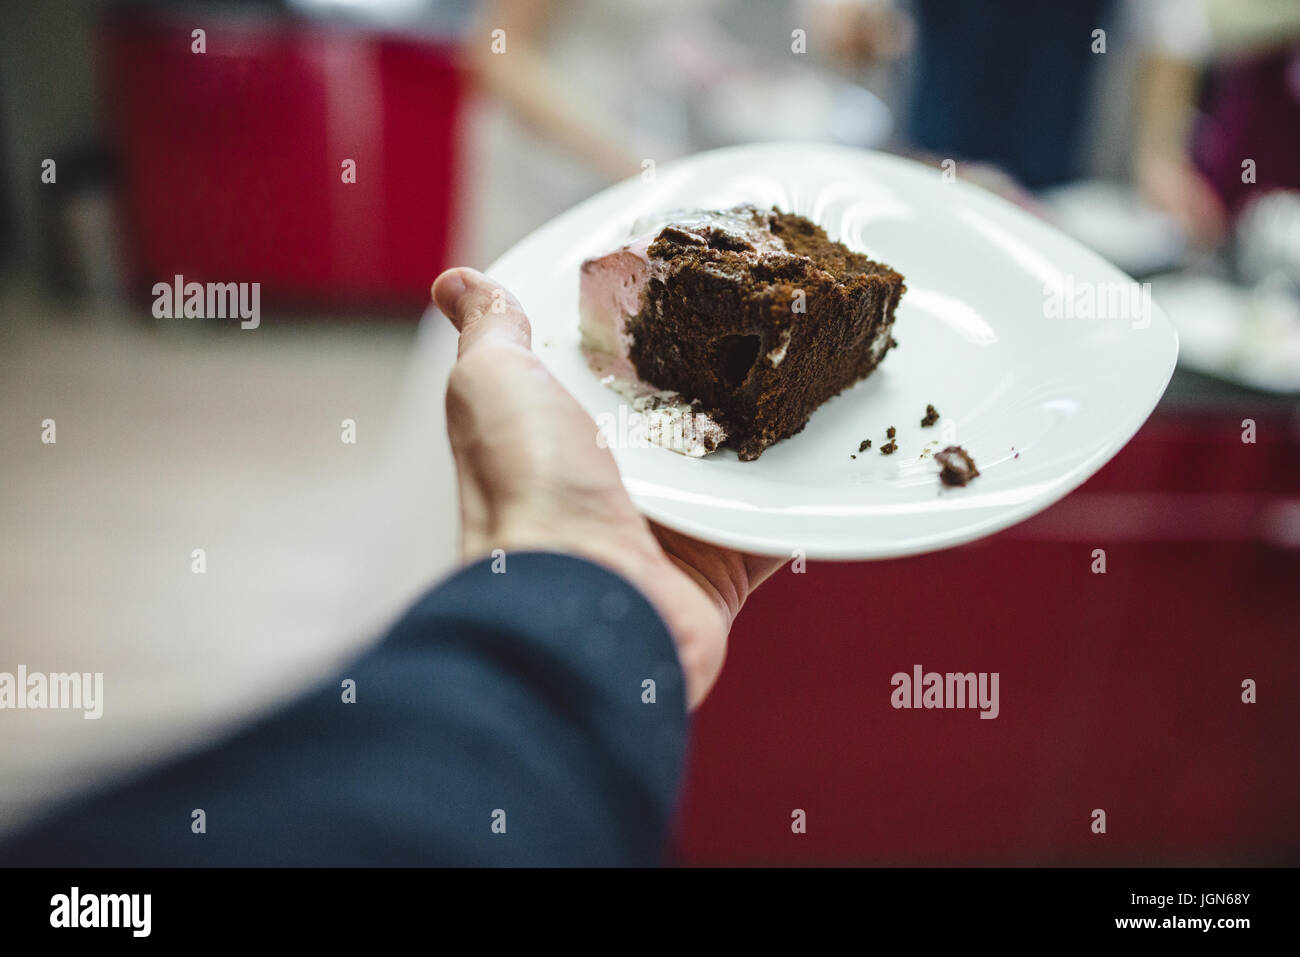 men's hand holding Slice of glazed chocolate wedding cake on the plate. Stock Photo